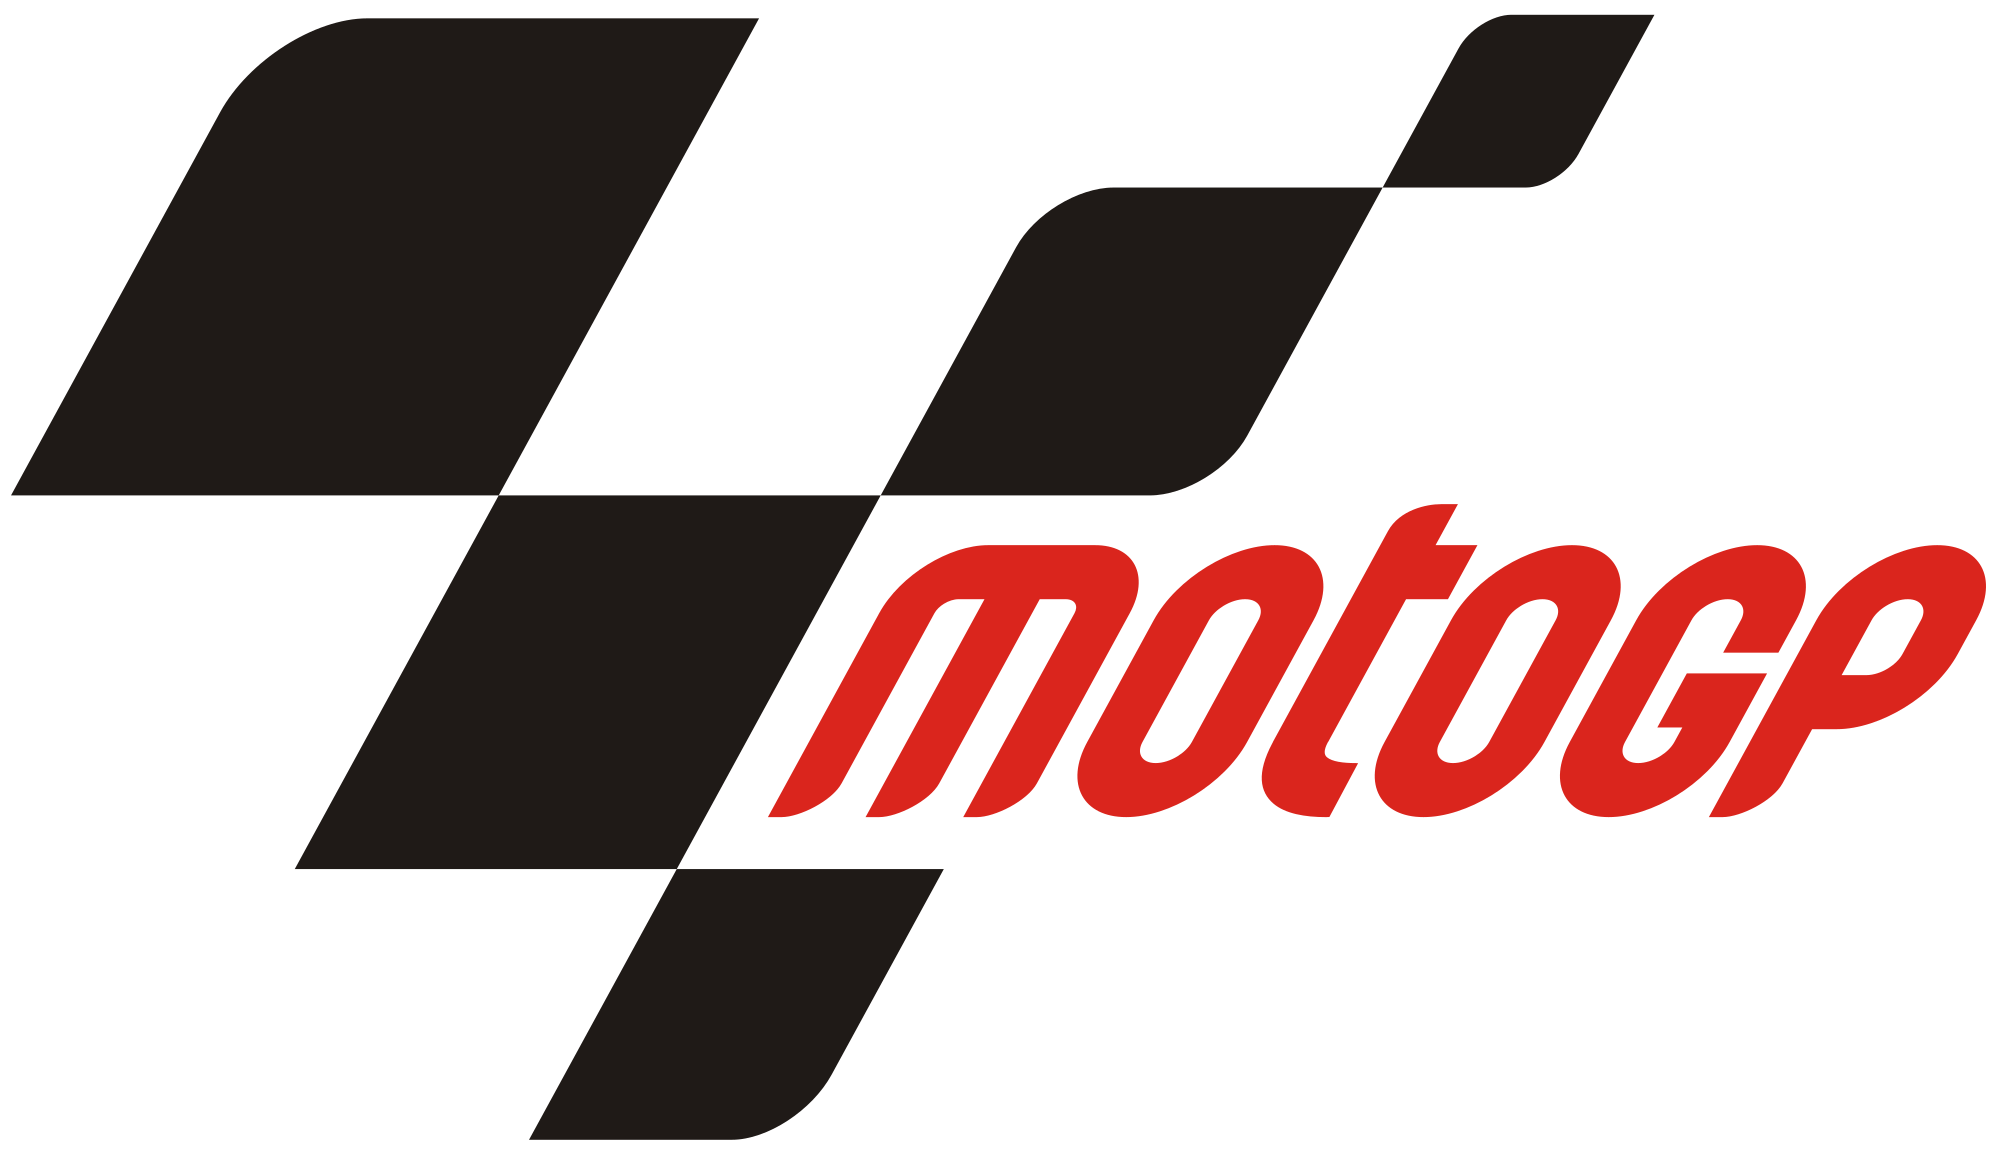 MotoGP Logo - Grand Prix motorcycle racing